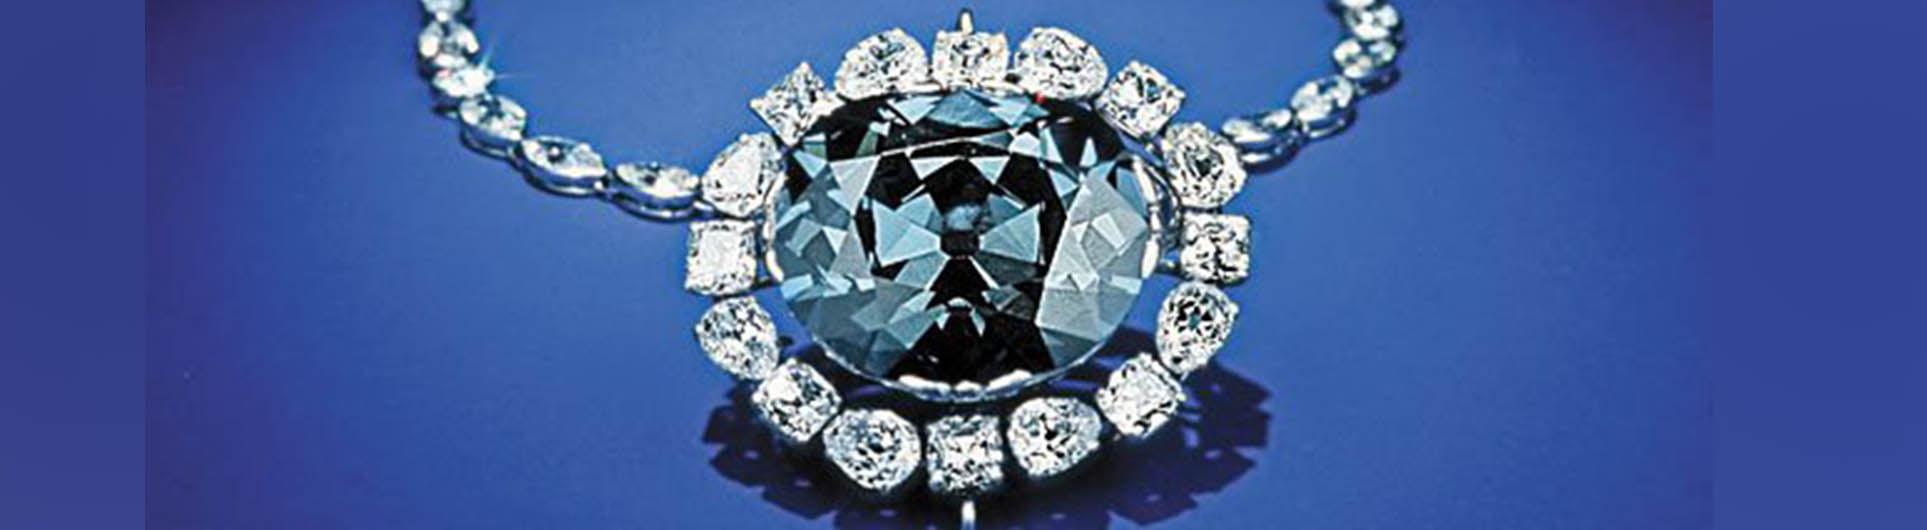 Most Expensive Diamonds No. 4 - The Hope Diamond - Monroe Yorke Diamonds